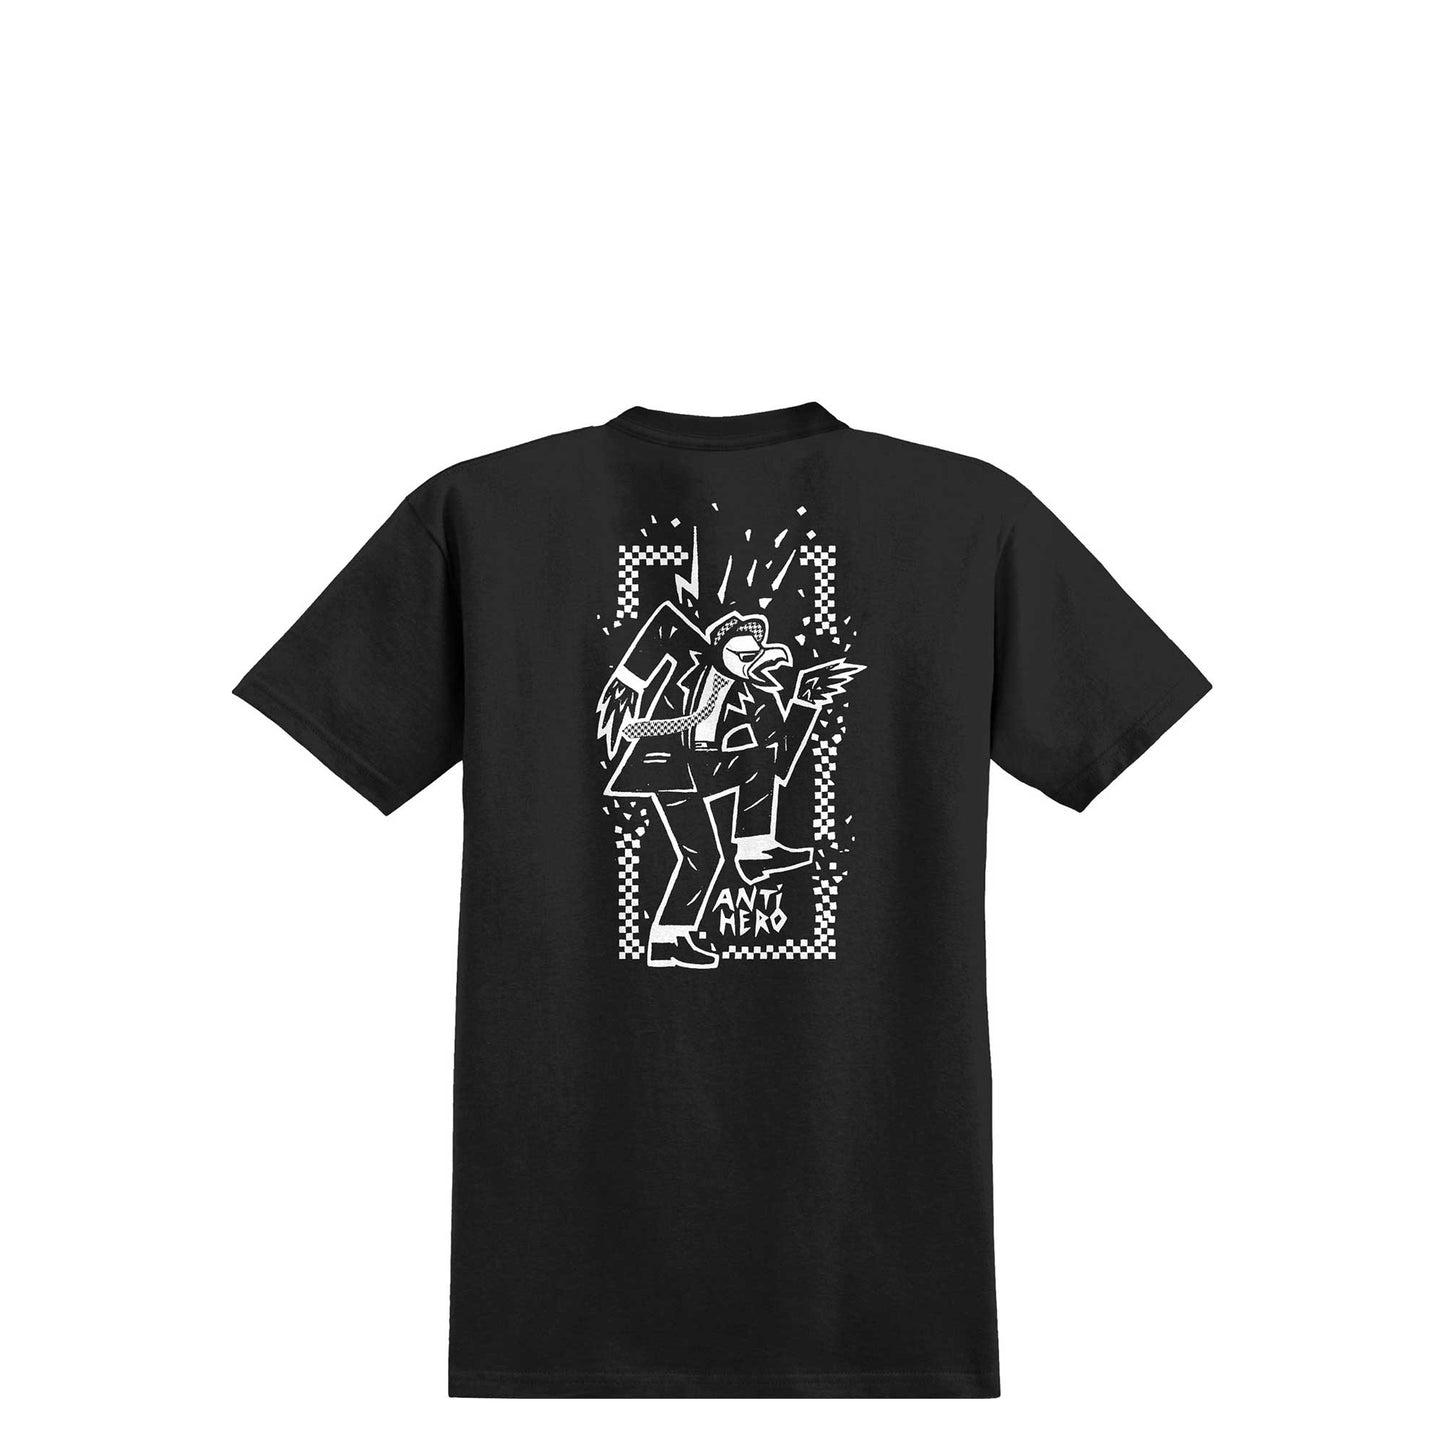 Anti Hero Rude Bwoy T-Shirt, black w white prints - Tiki Room Skateboards - 1